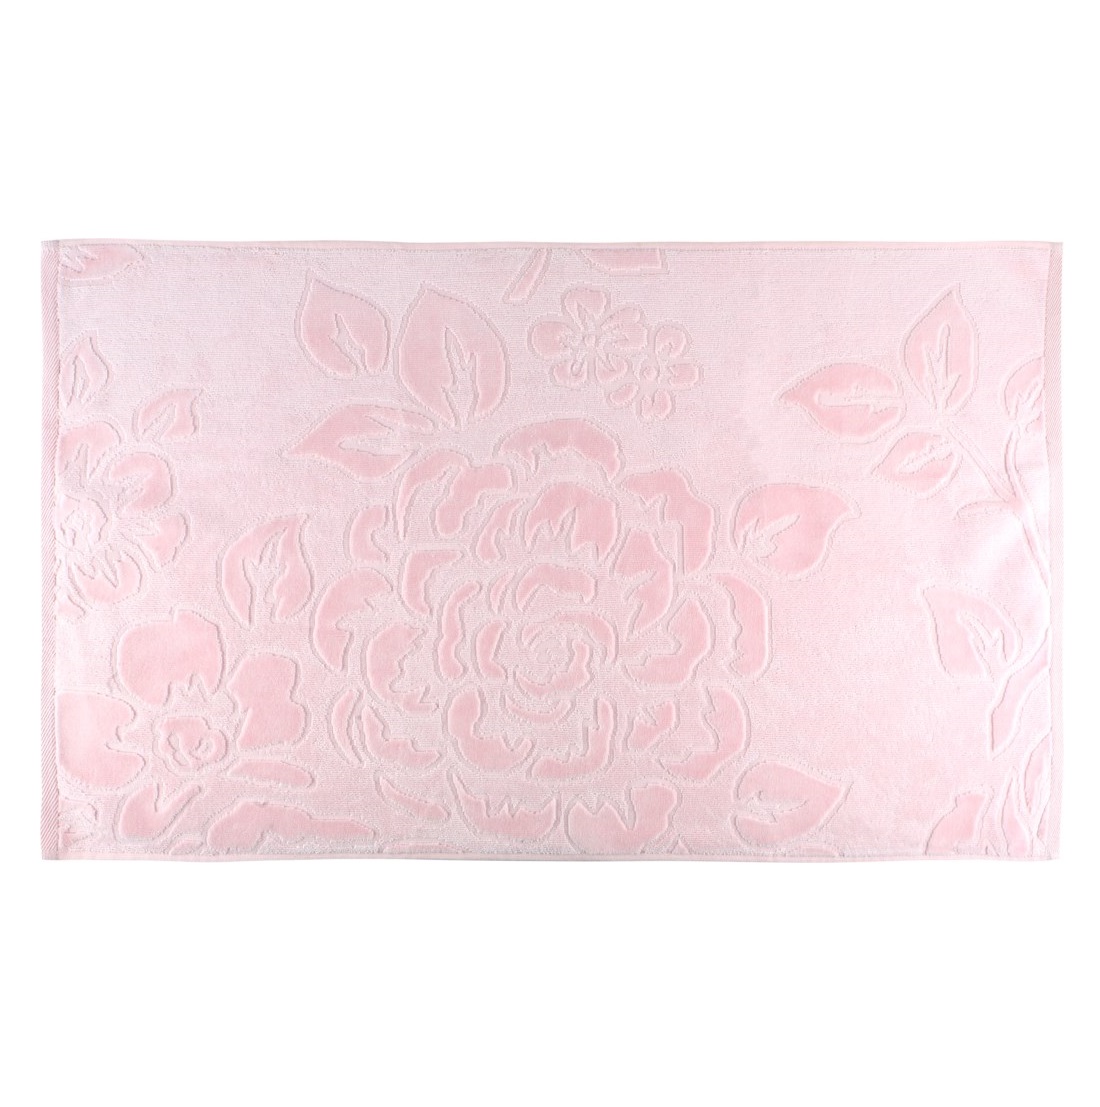 Полотенце махровое гладкокрашенное Cleanelly Biscottom 30х50 розовый полотенце cleanelly biscottom бирюзовое 30х50 см